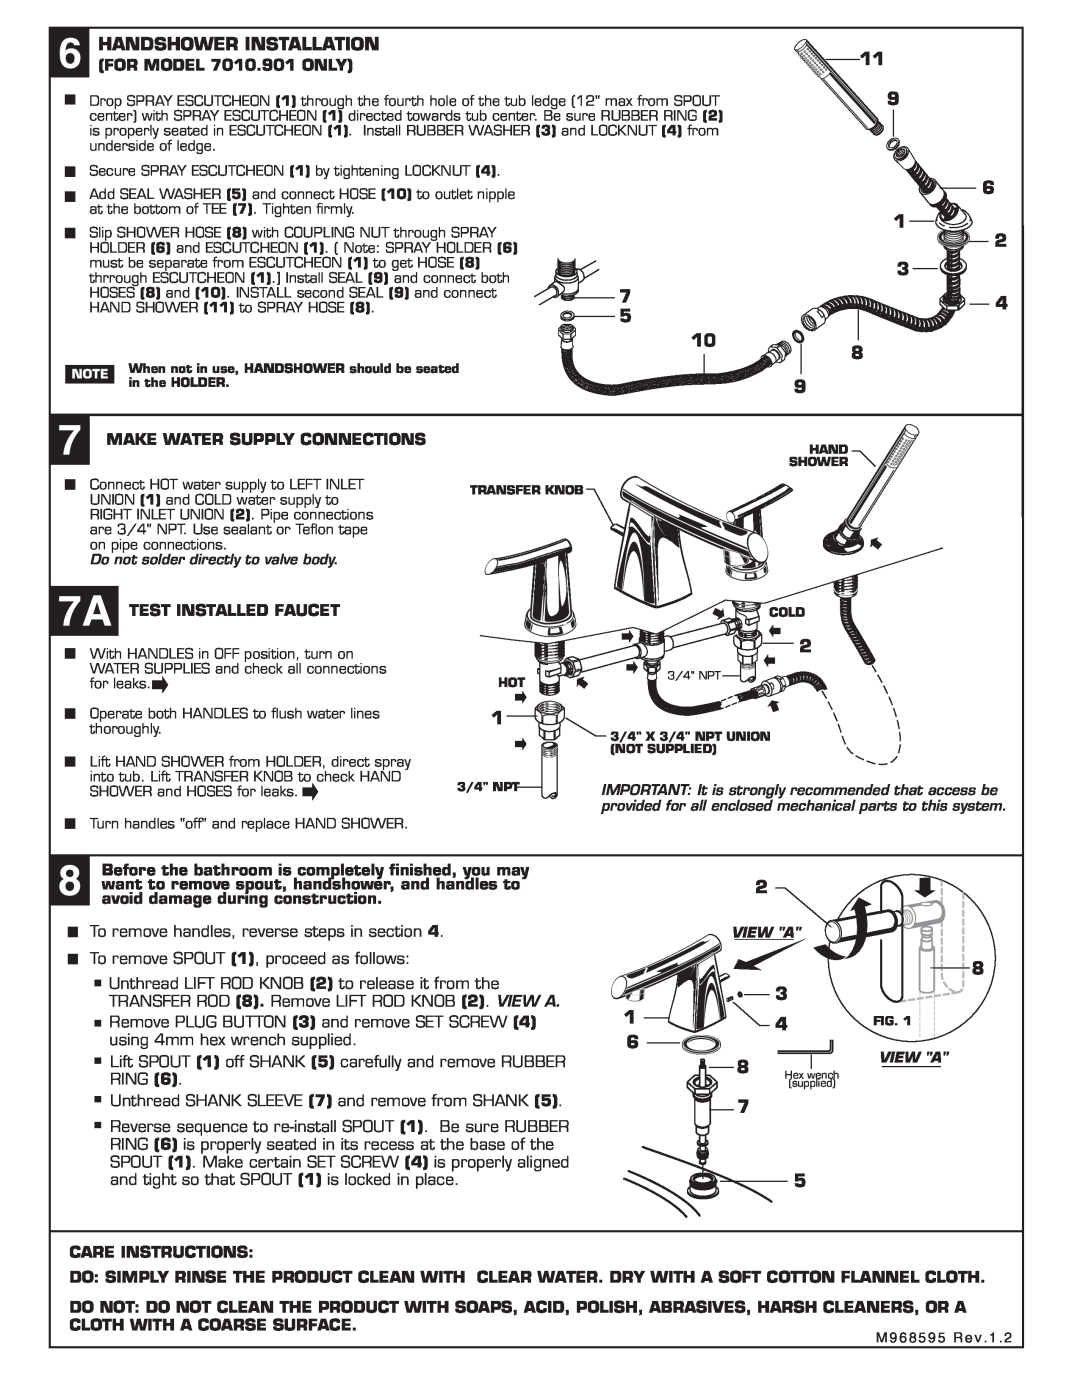 American Standard 7010.901, 7010.900 installation instructions Handshower Installation 